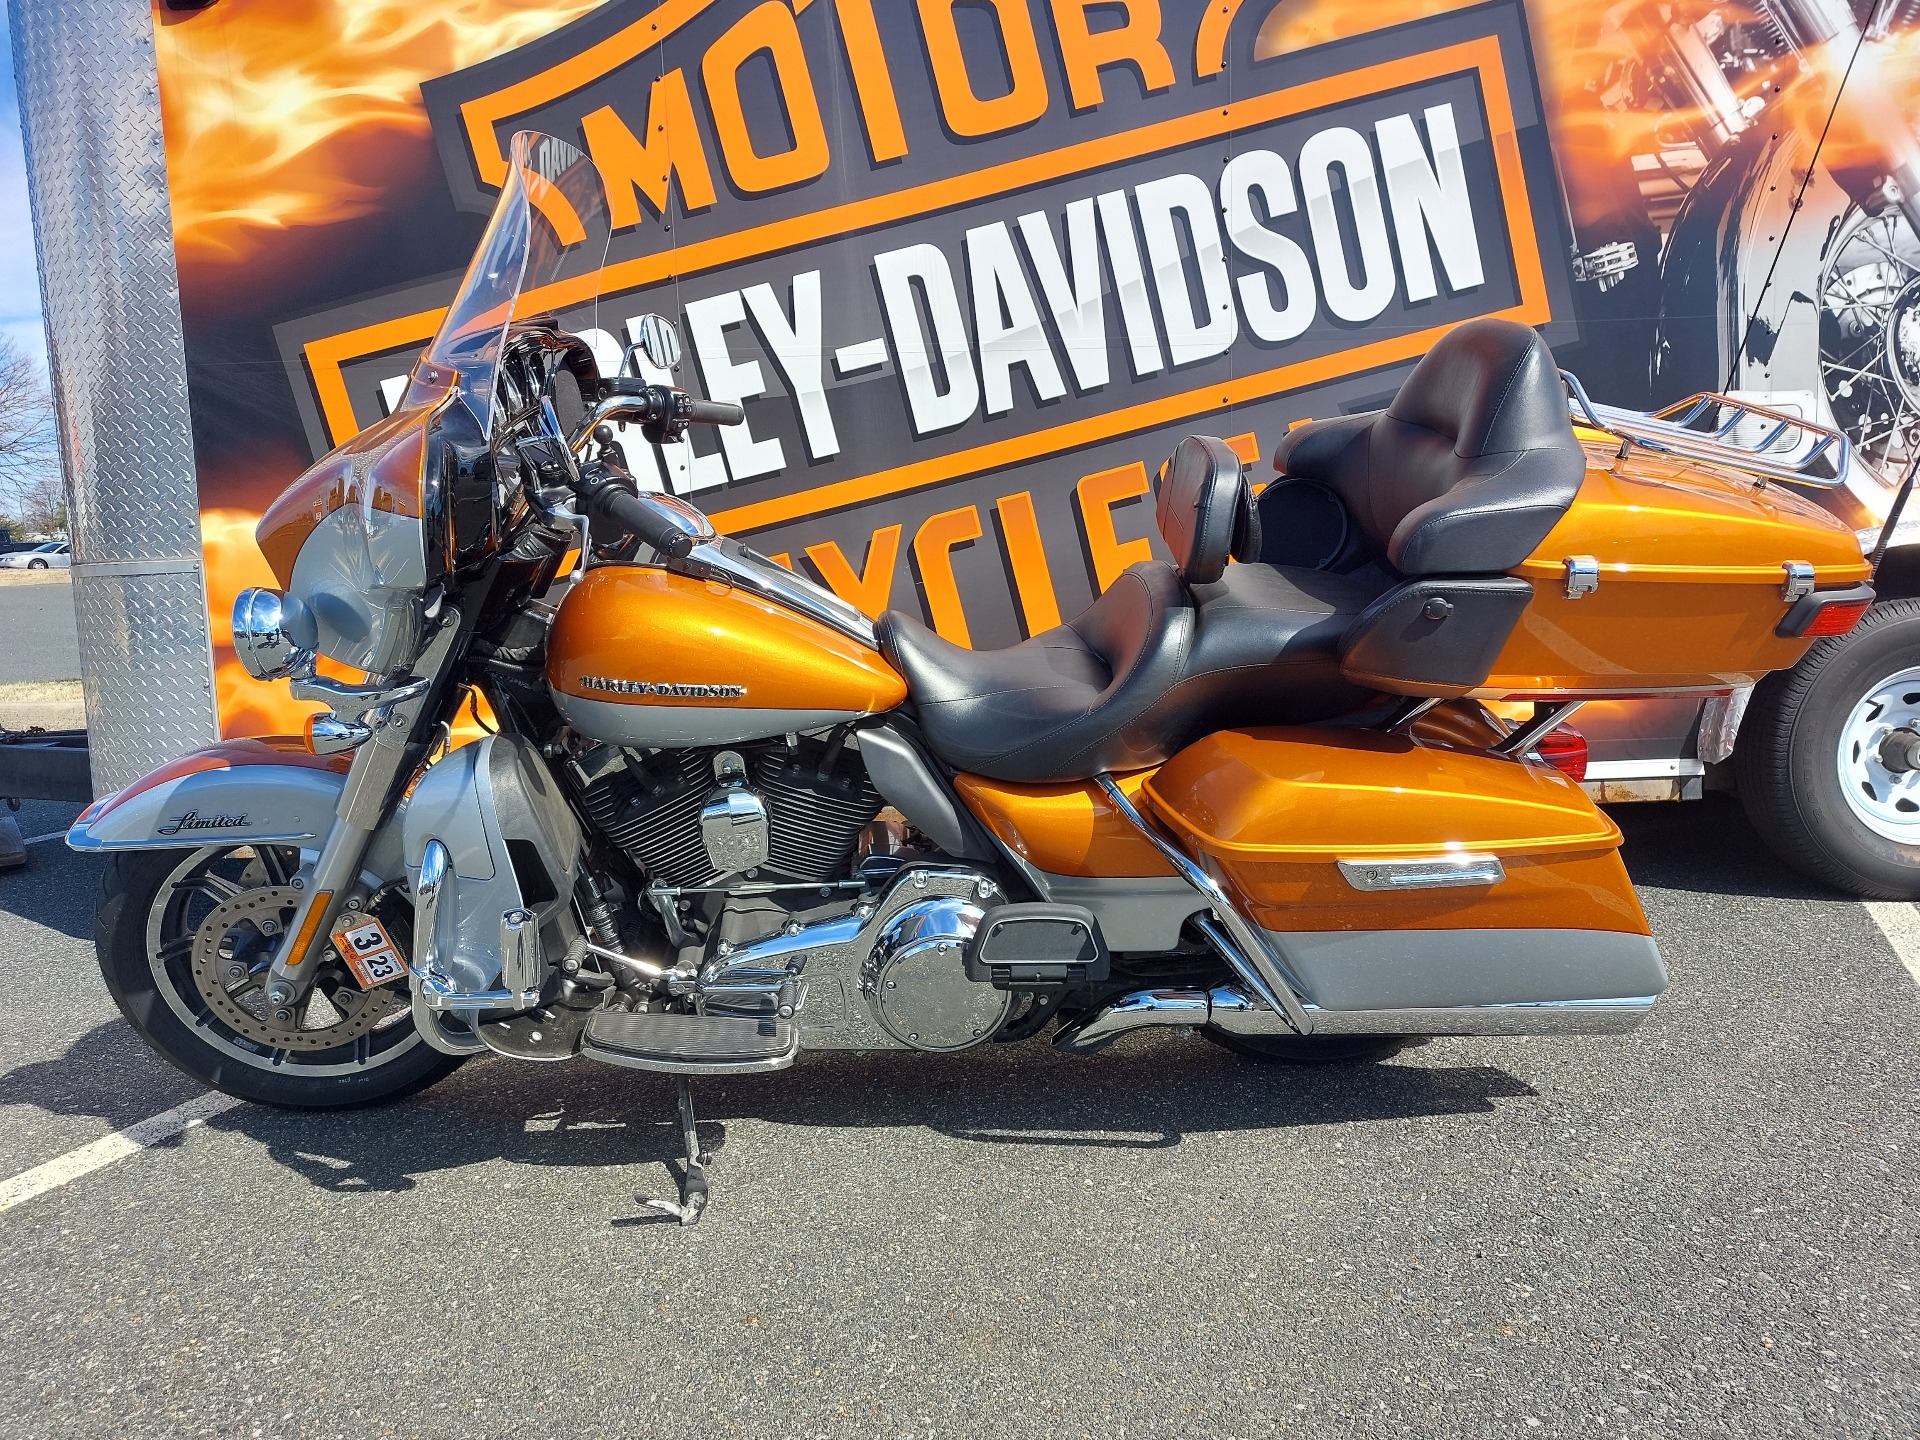 2014 Harley-Davidson Electra Glide® Ultra Classic® in Fredericksburg, Virginia - Photo 1